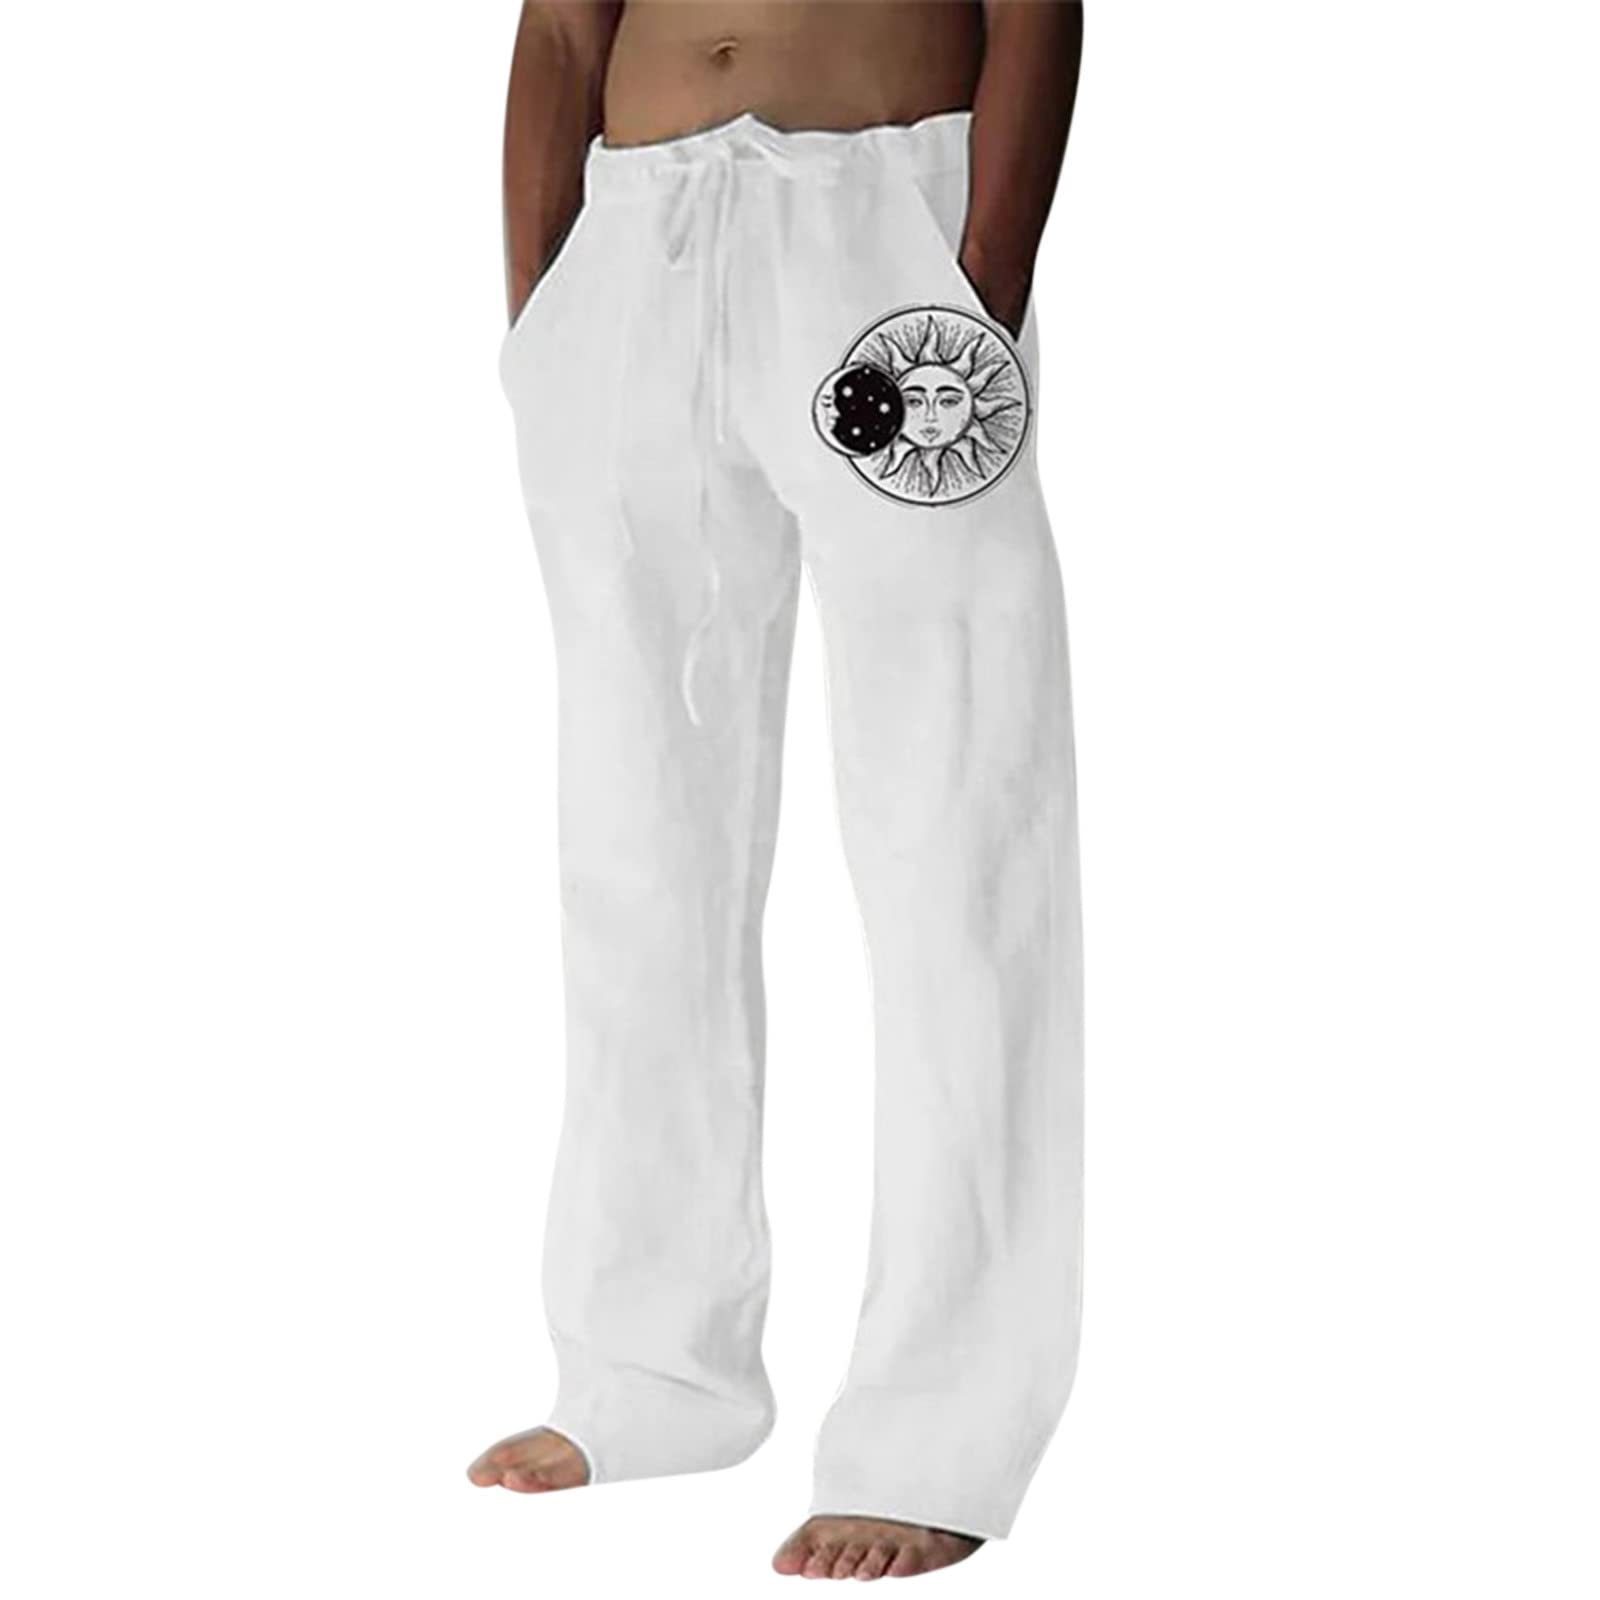 Tdoenbutw Mens Baggy Yoga Pants Pockets, Men's Cotton Linen